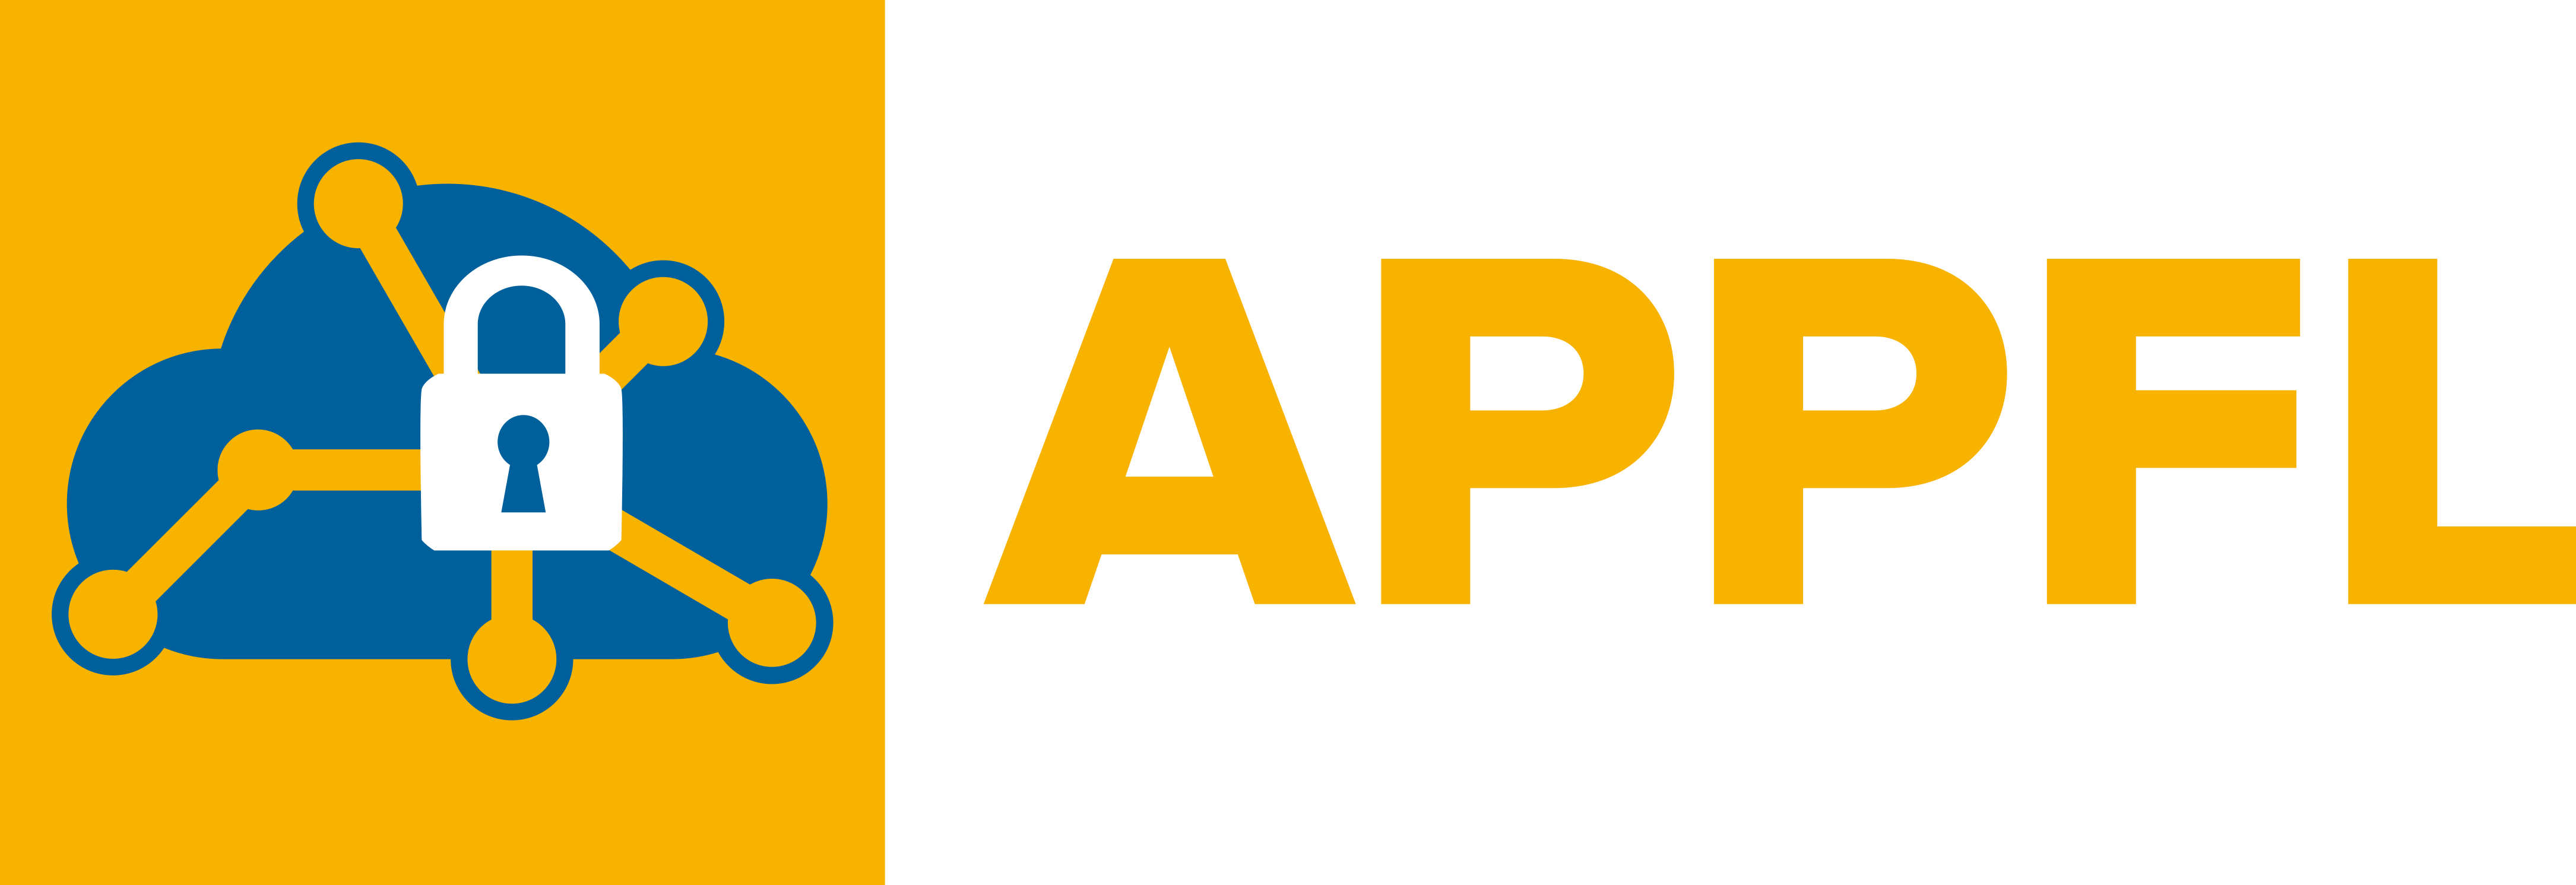 APPFL  documentation - Home